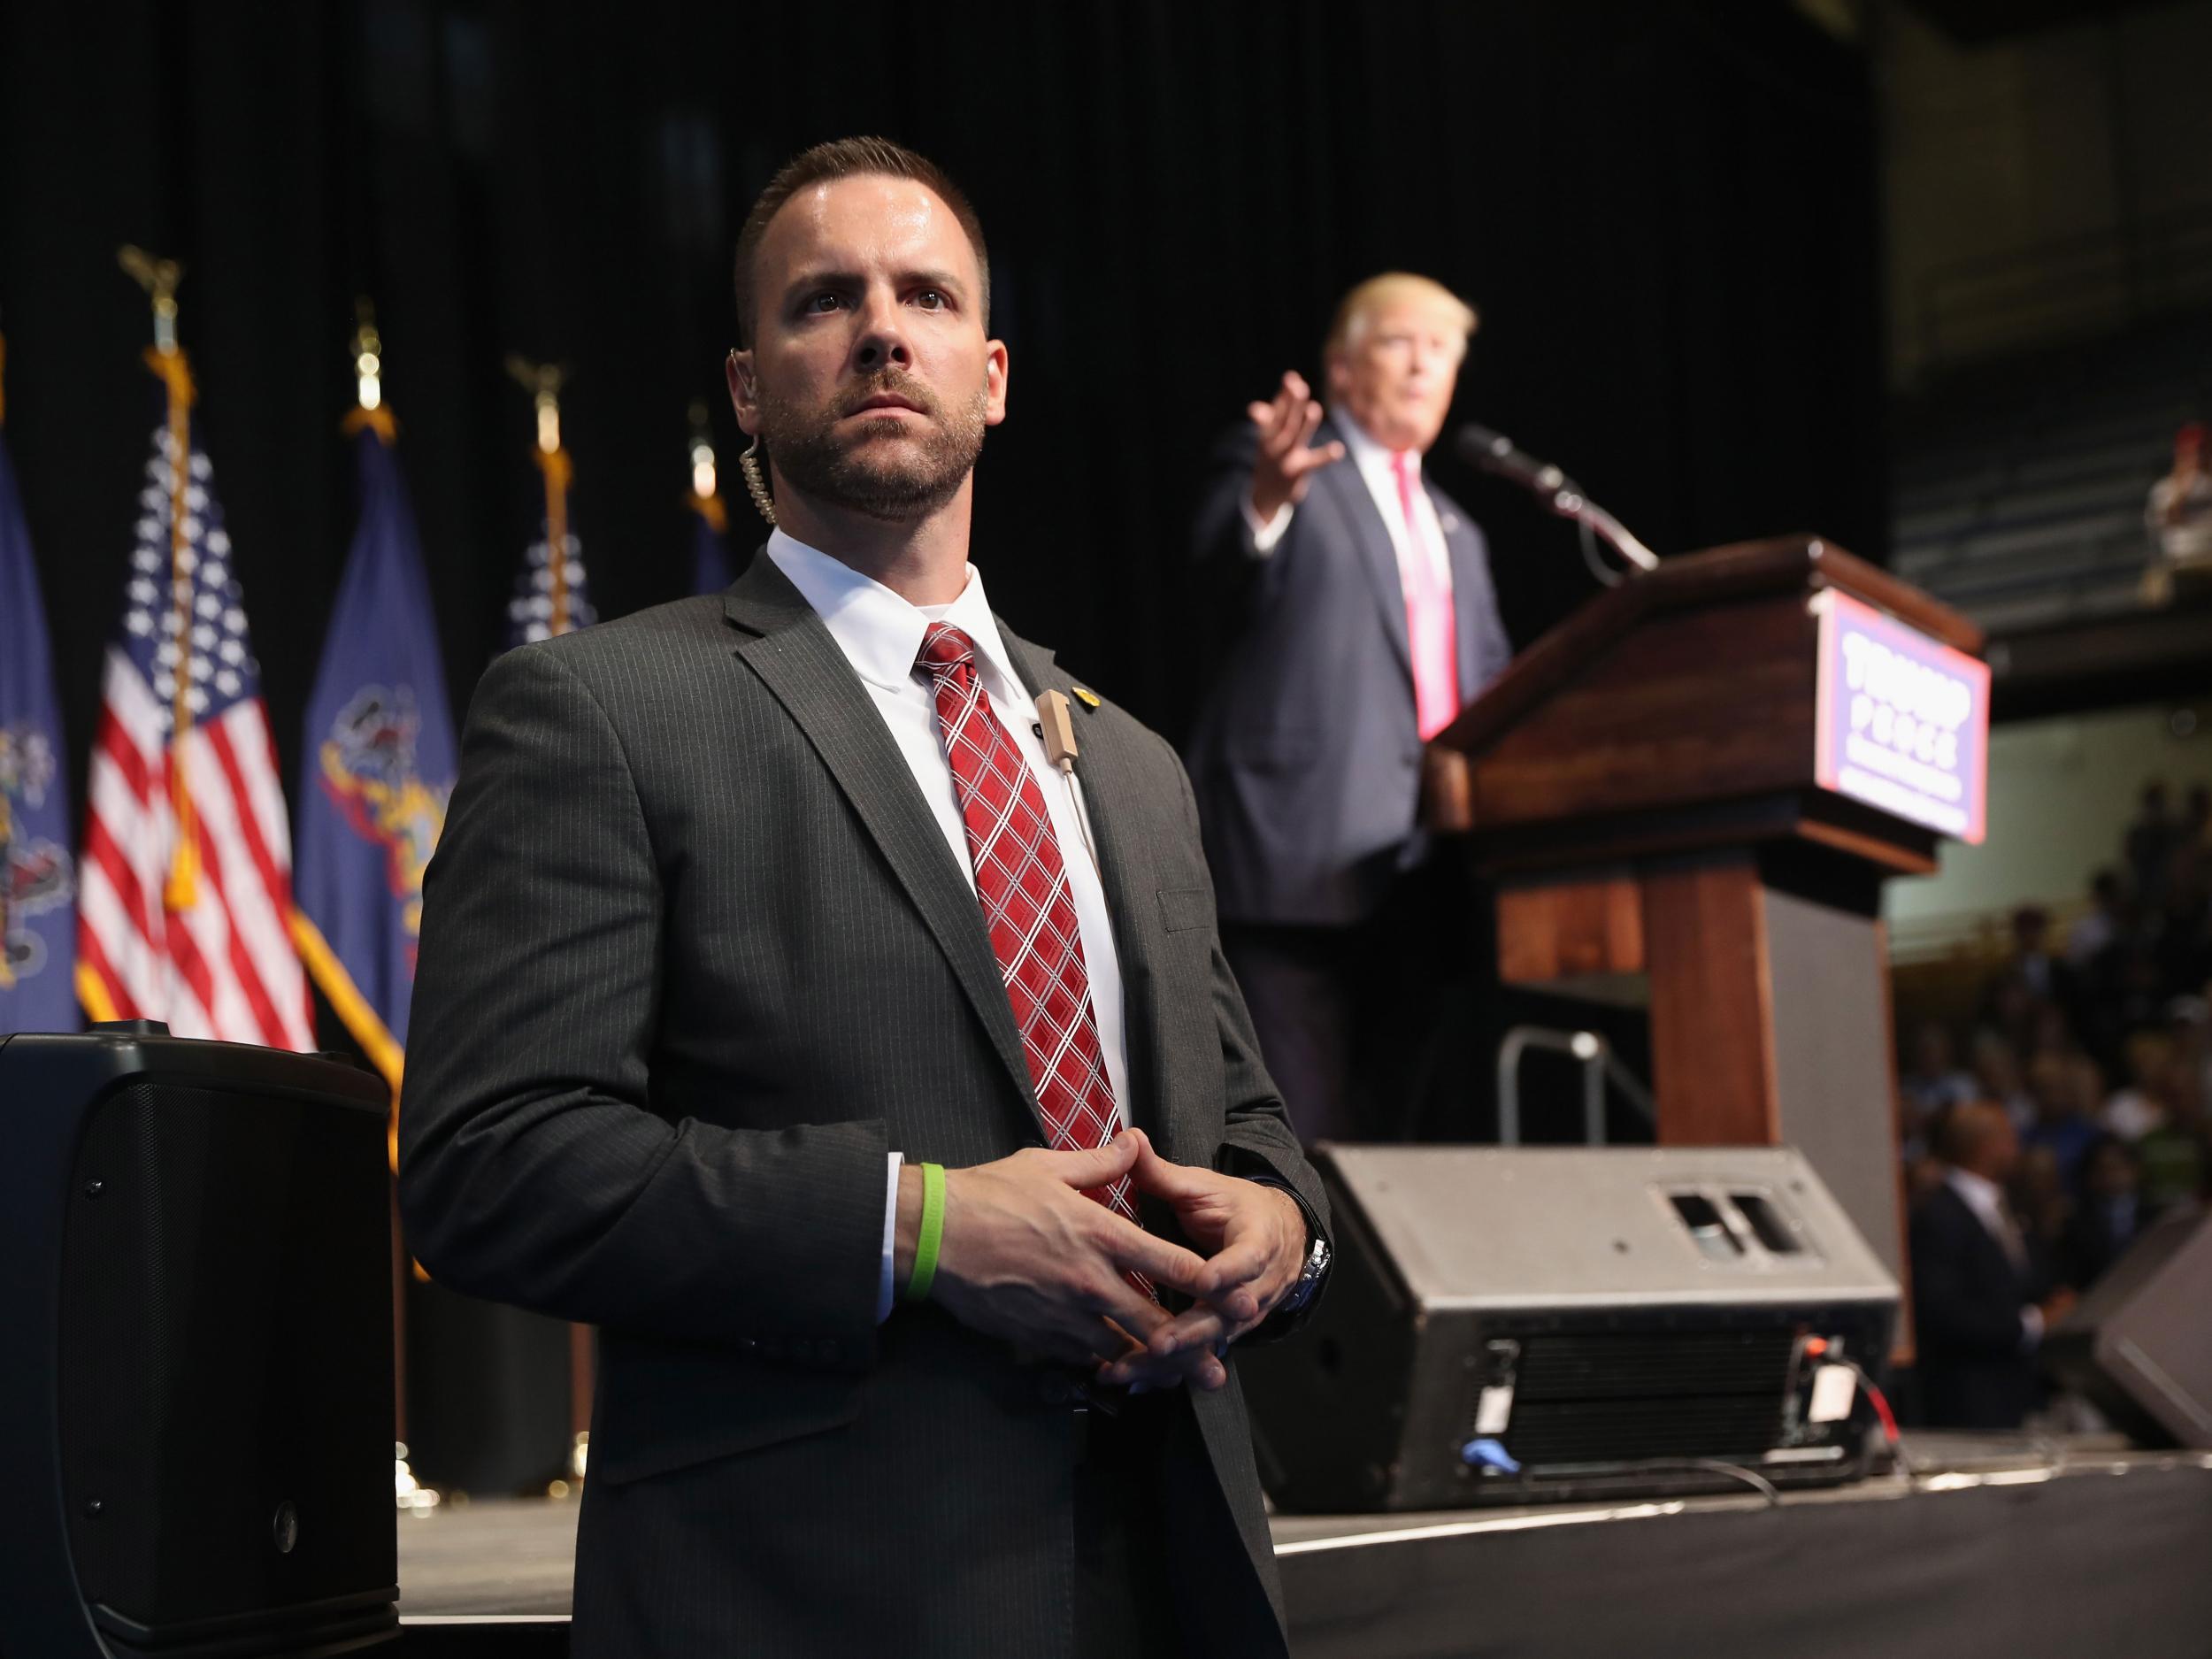 A Secret Service agent stands alert during a speech given by Mr Trump